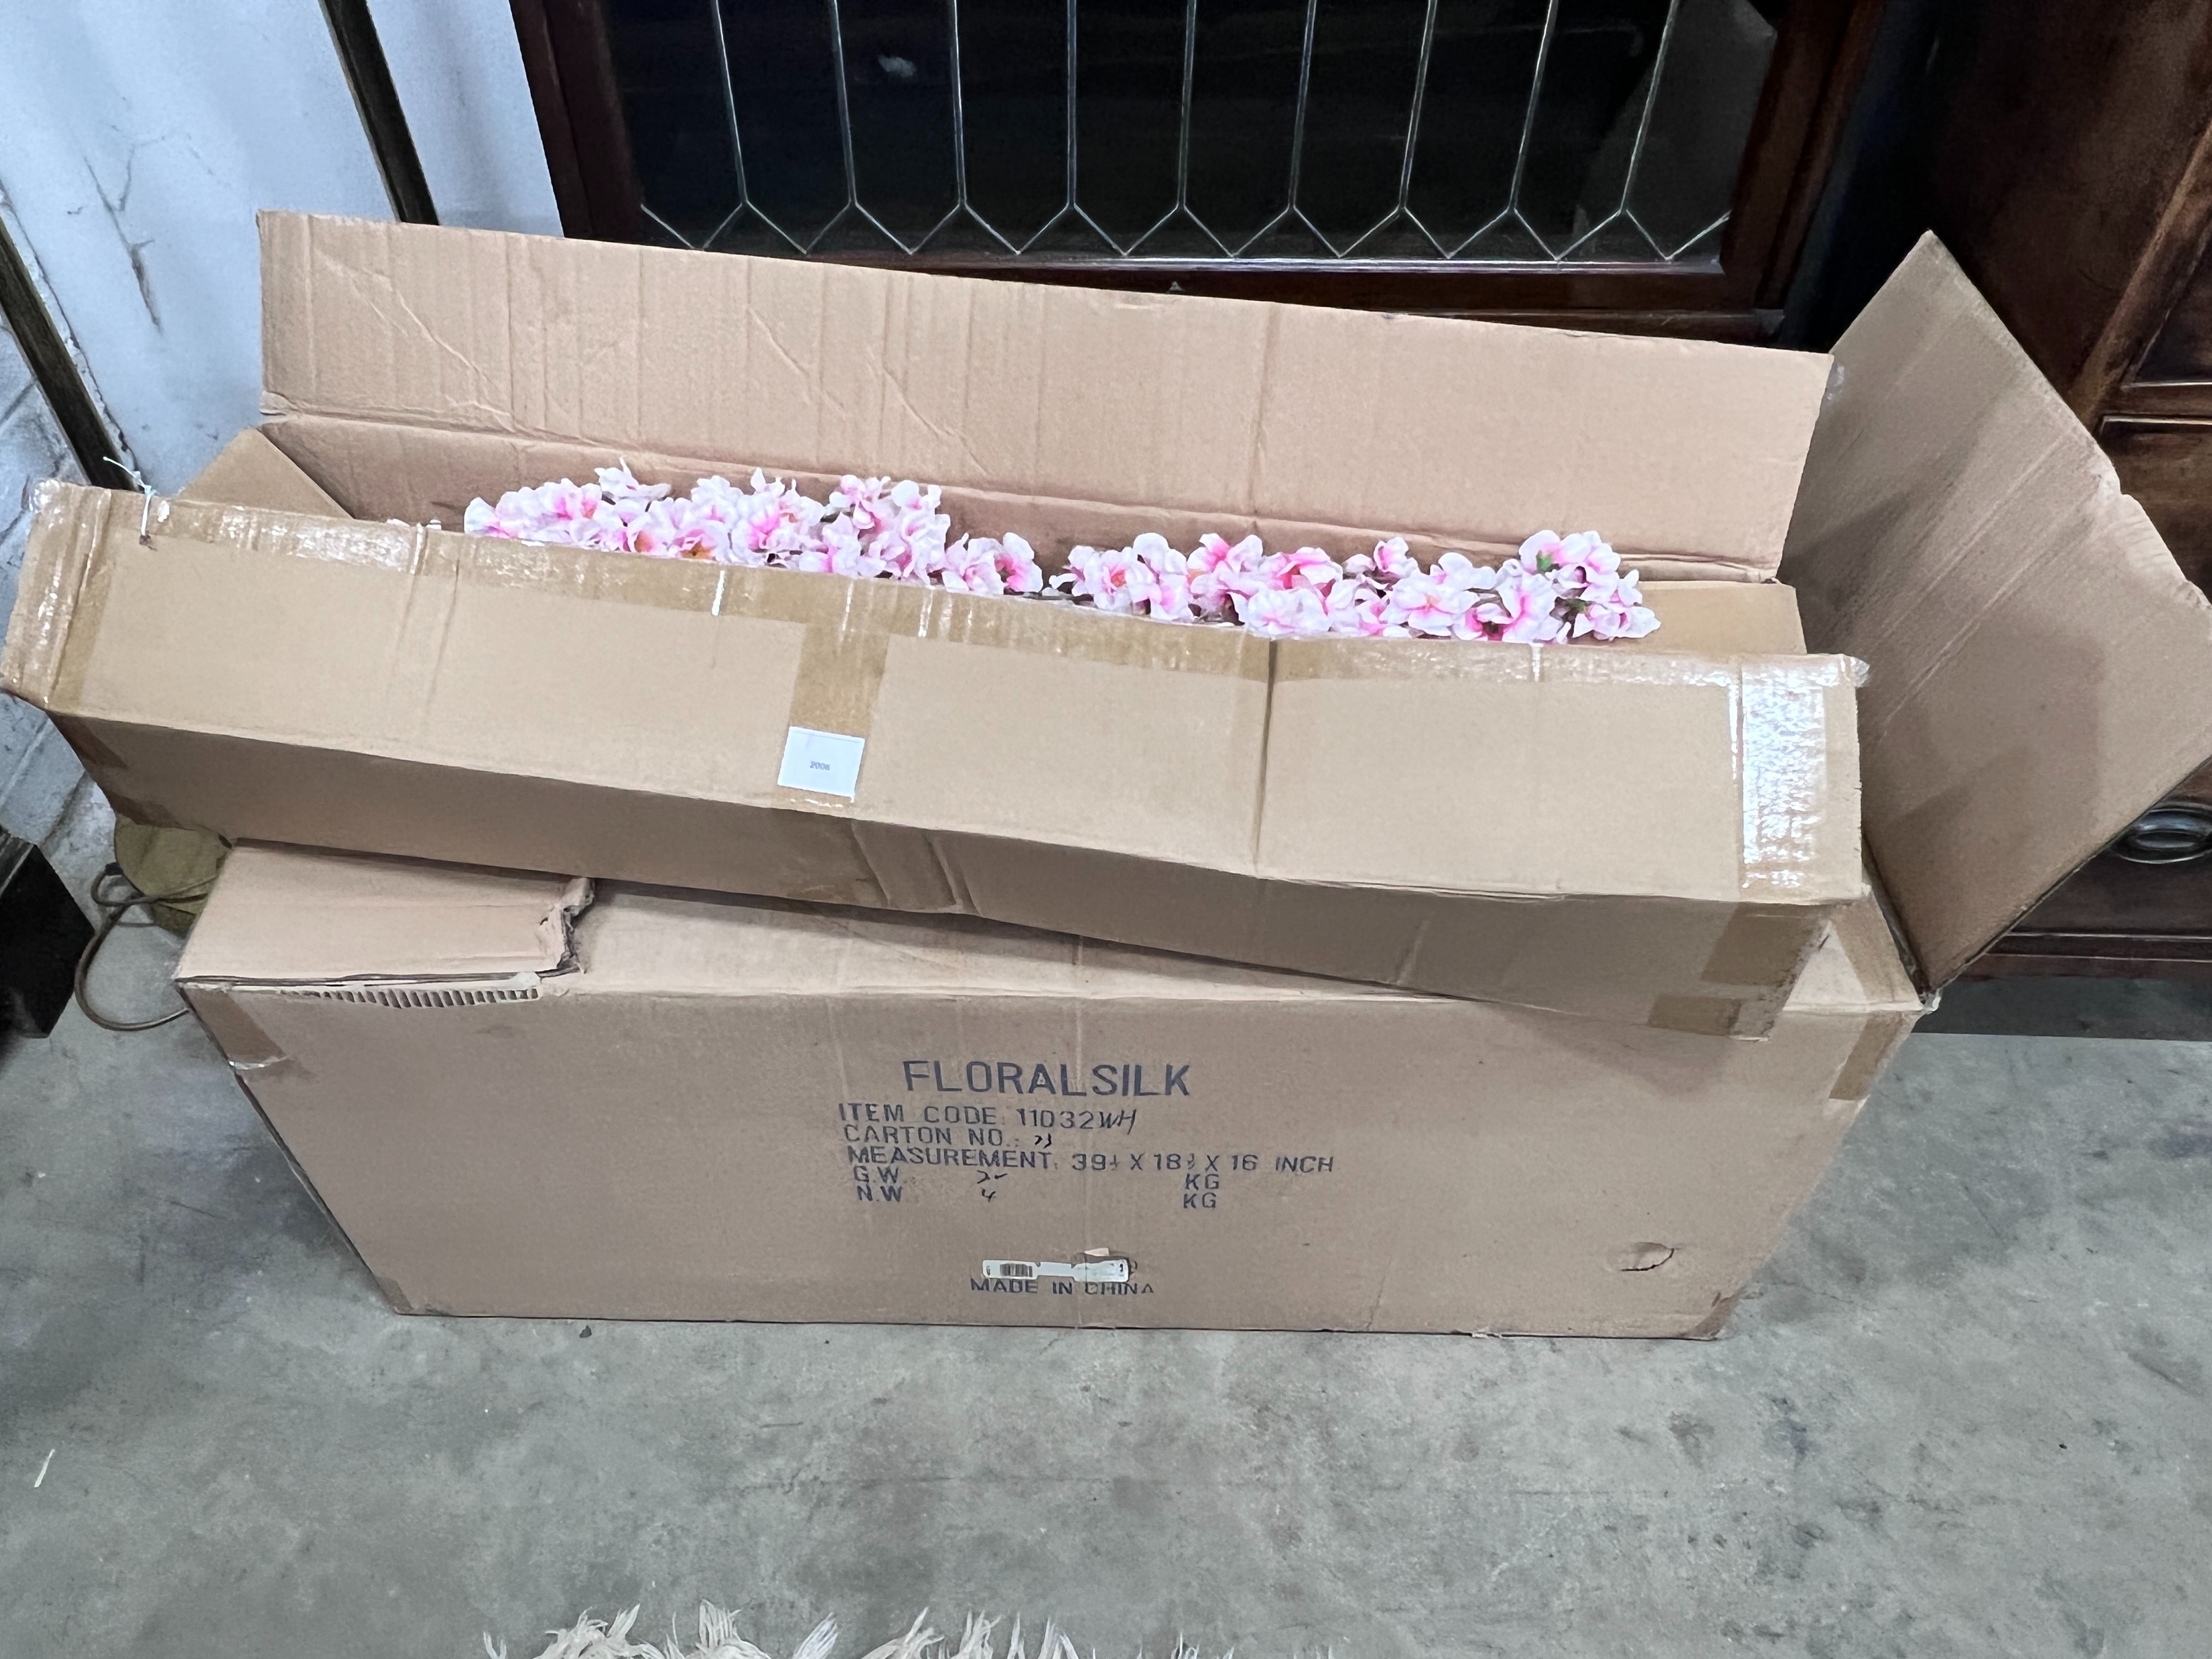 Six boxes of silk cherry blossom sprays